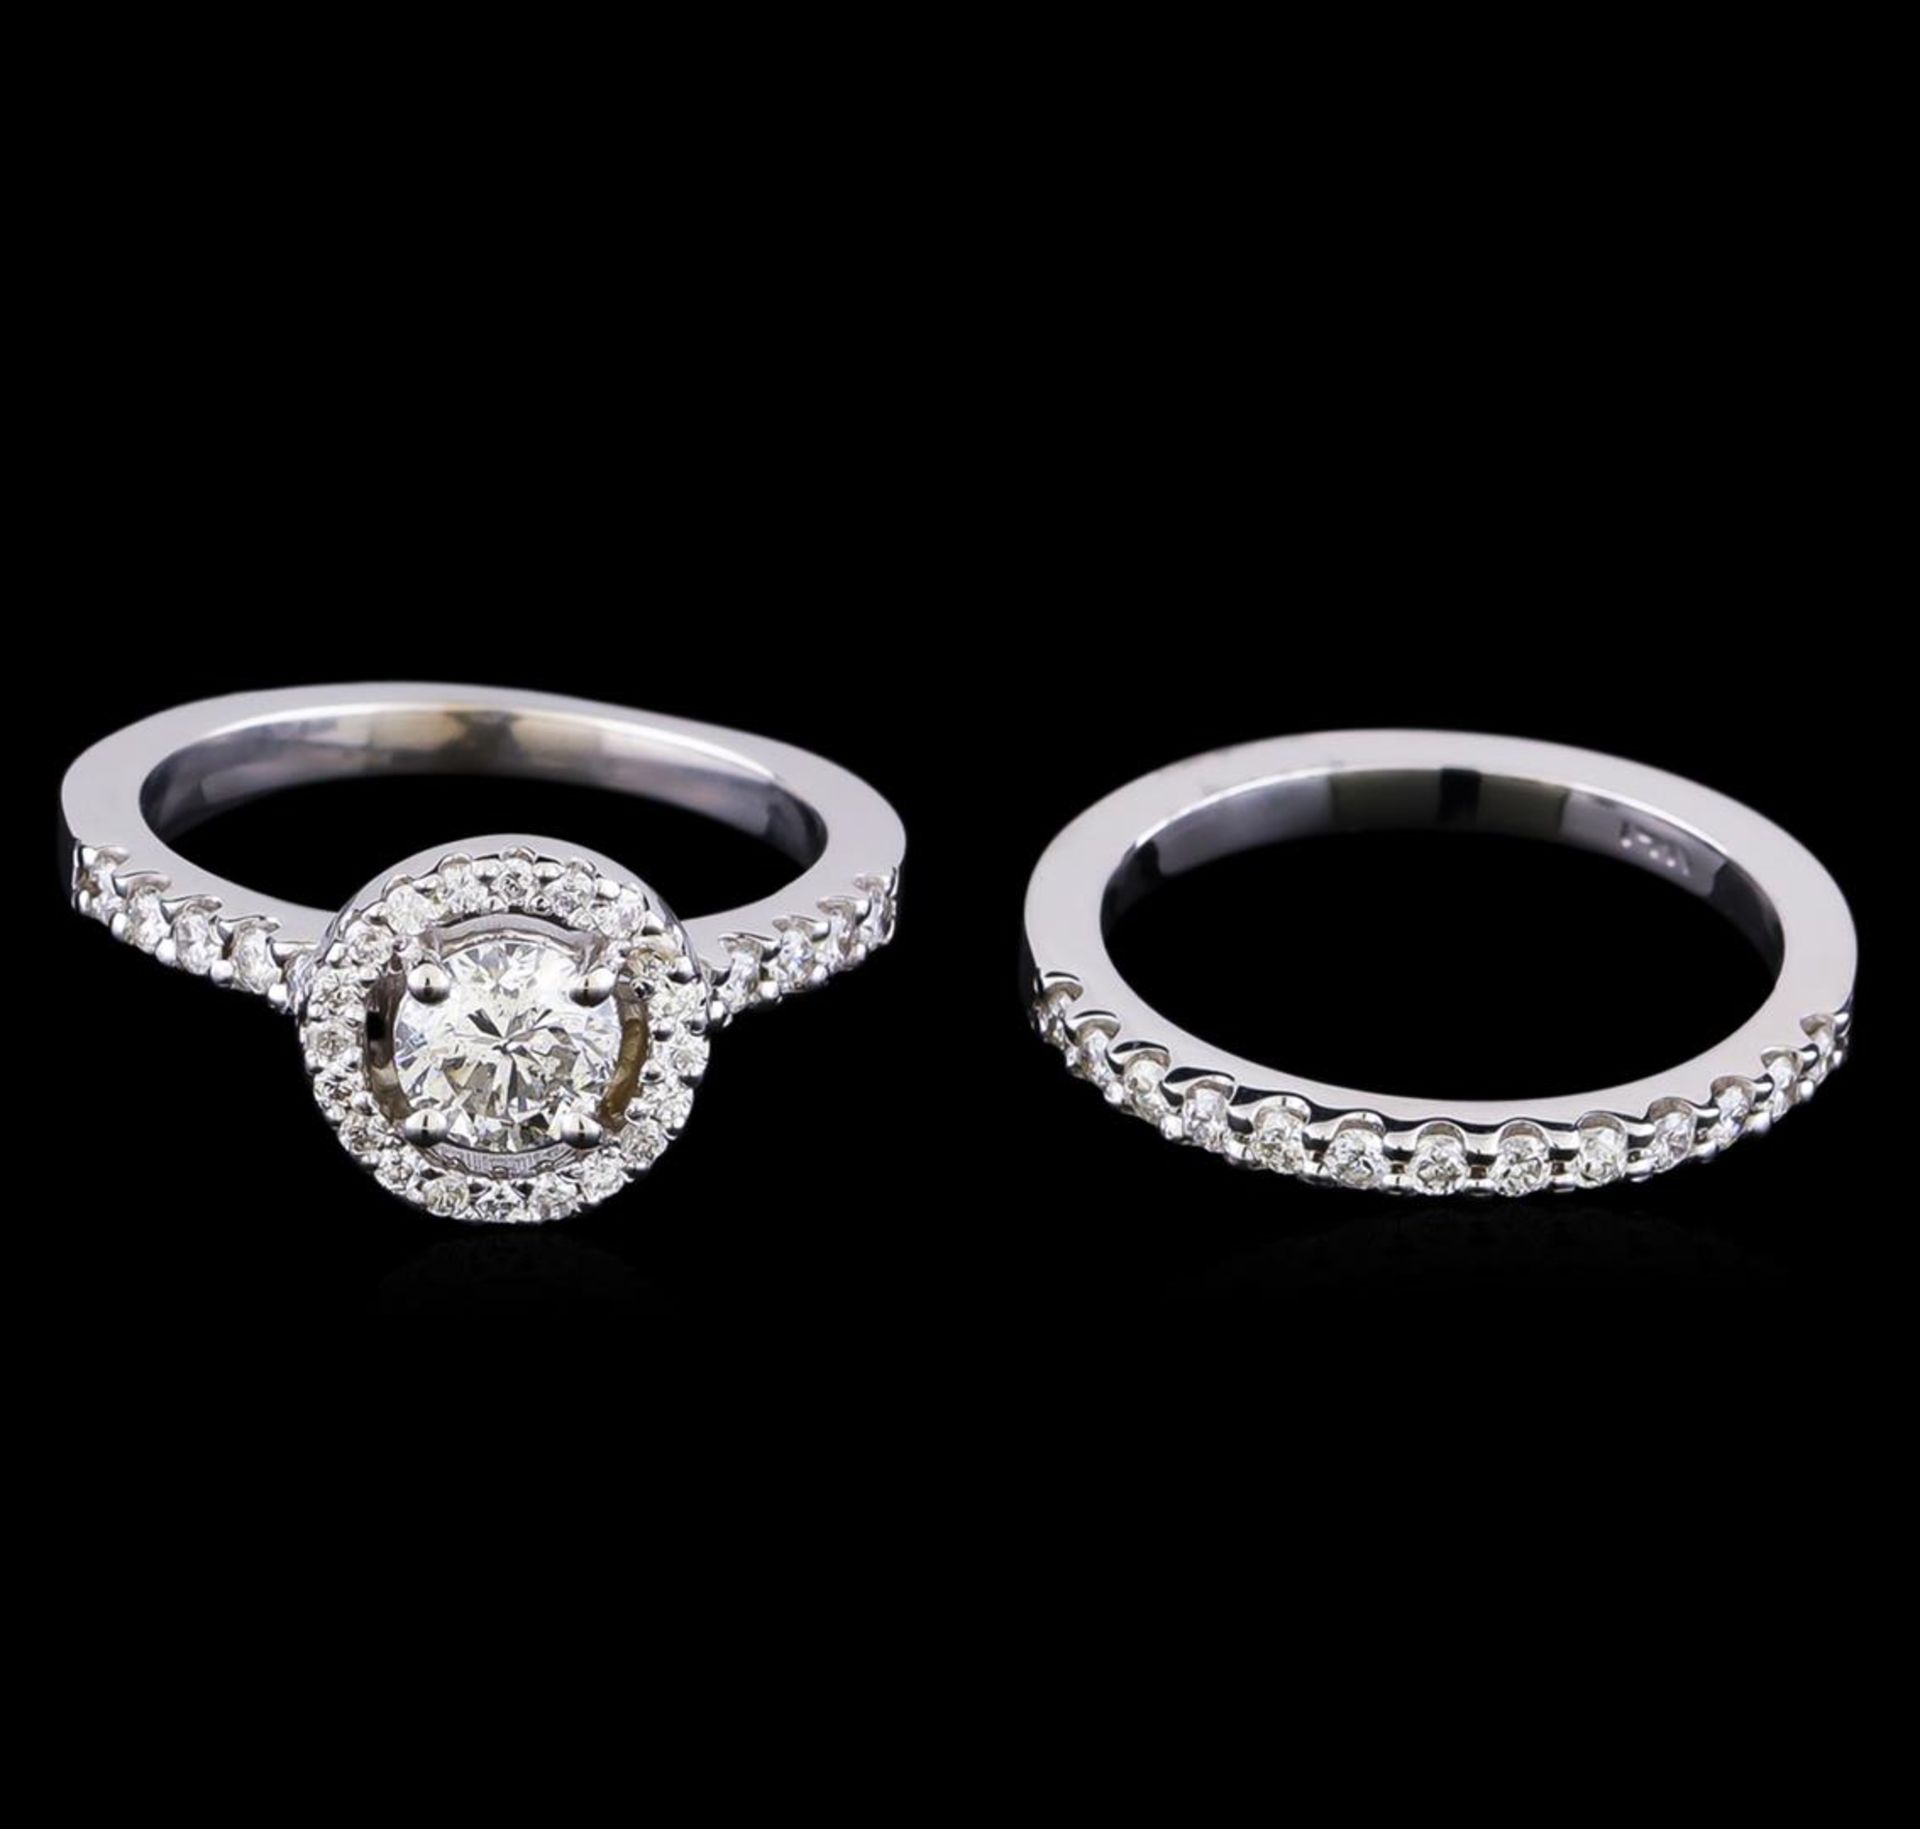 1.23 ctw Diamond Wedding Ring Set - 14KT White Gold - Image 2 of 4